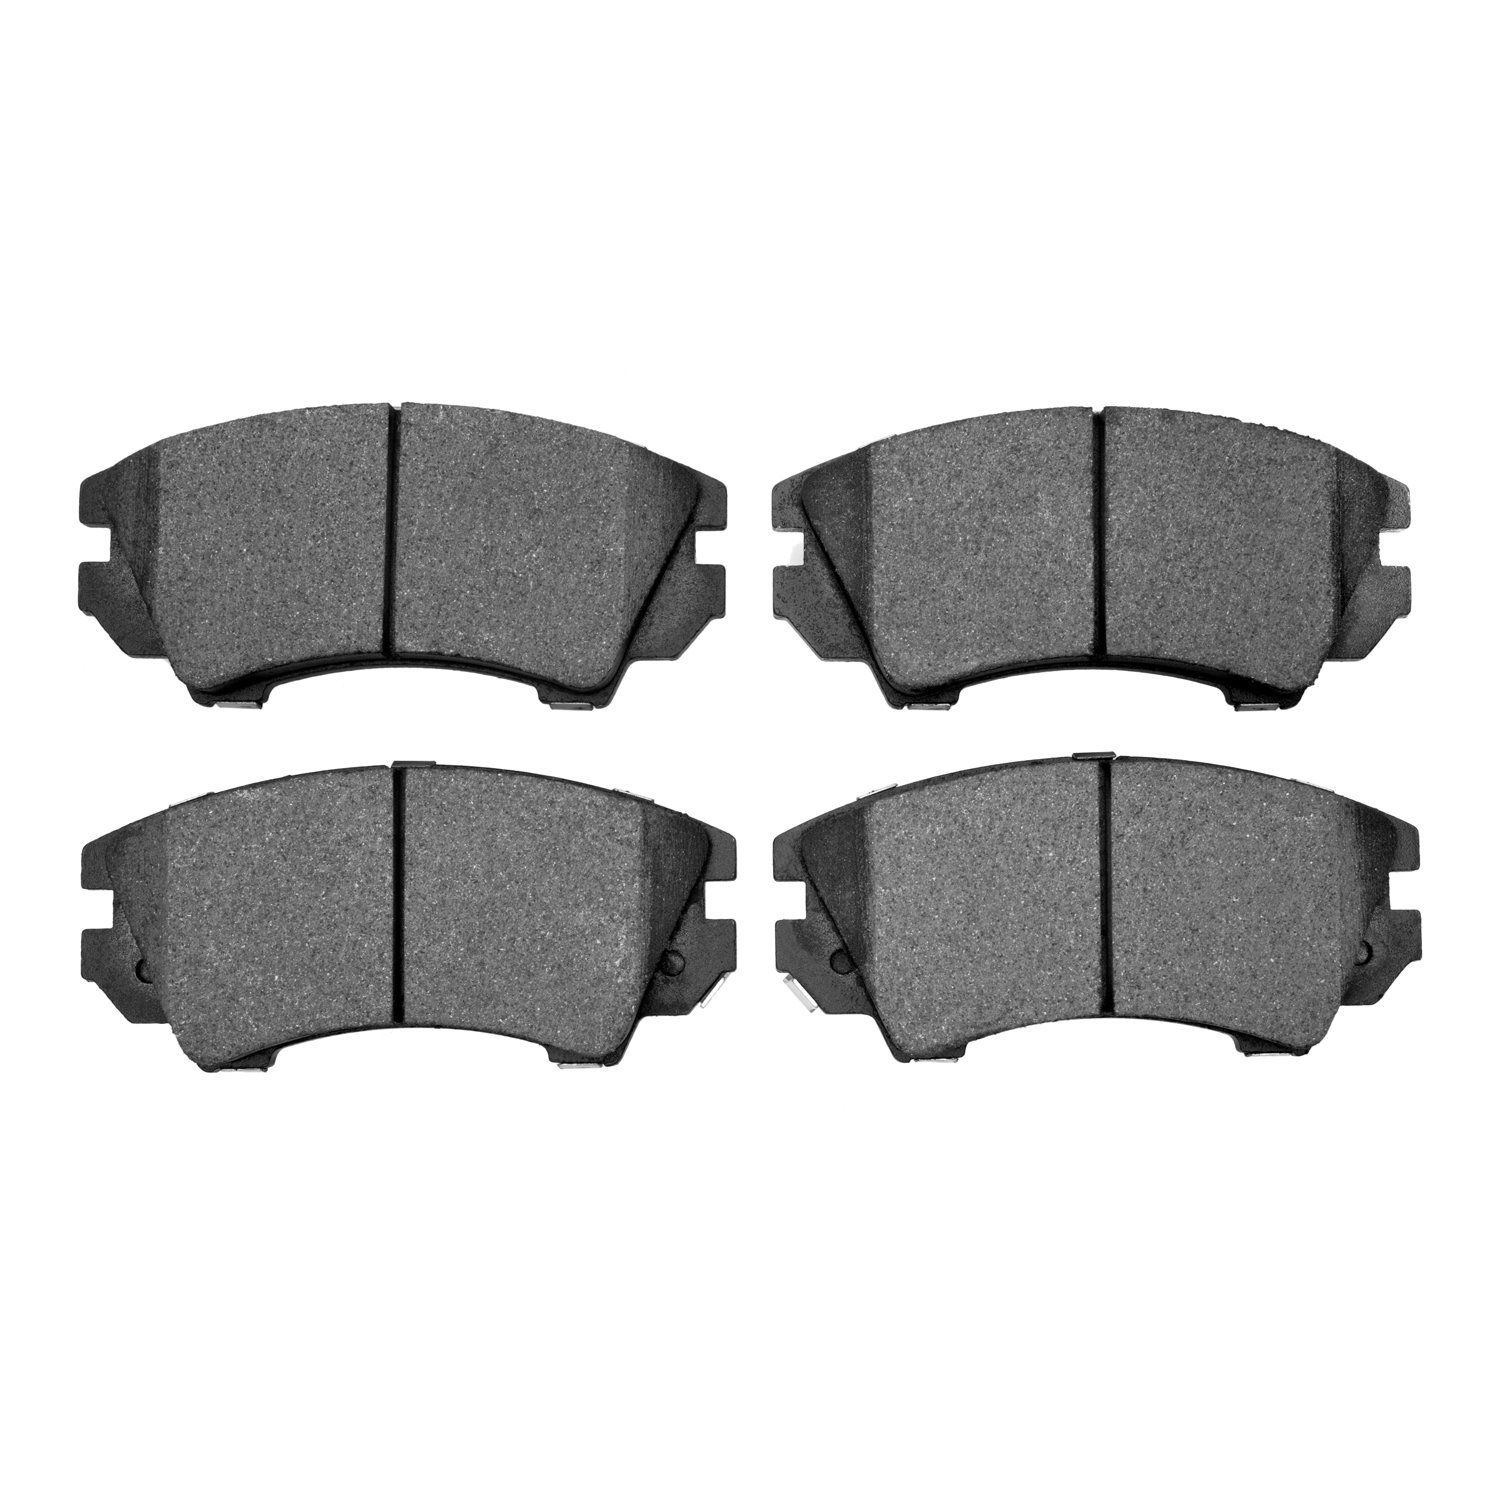 1551-1404-00 5000 Advanced Ceramic Brake Pads, 2010-2015 GM, Position: Front